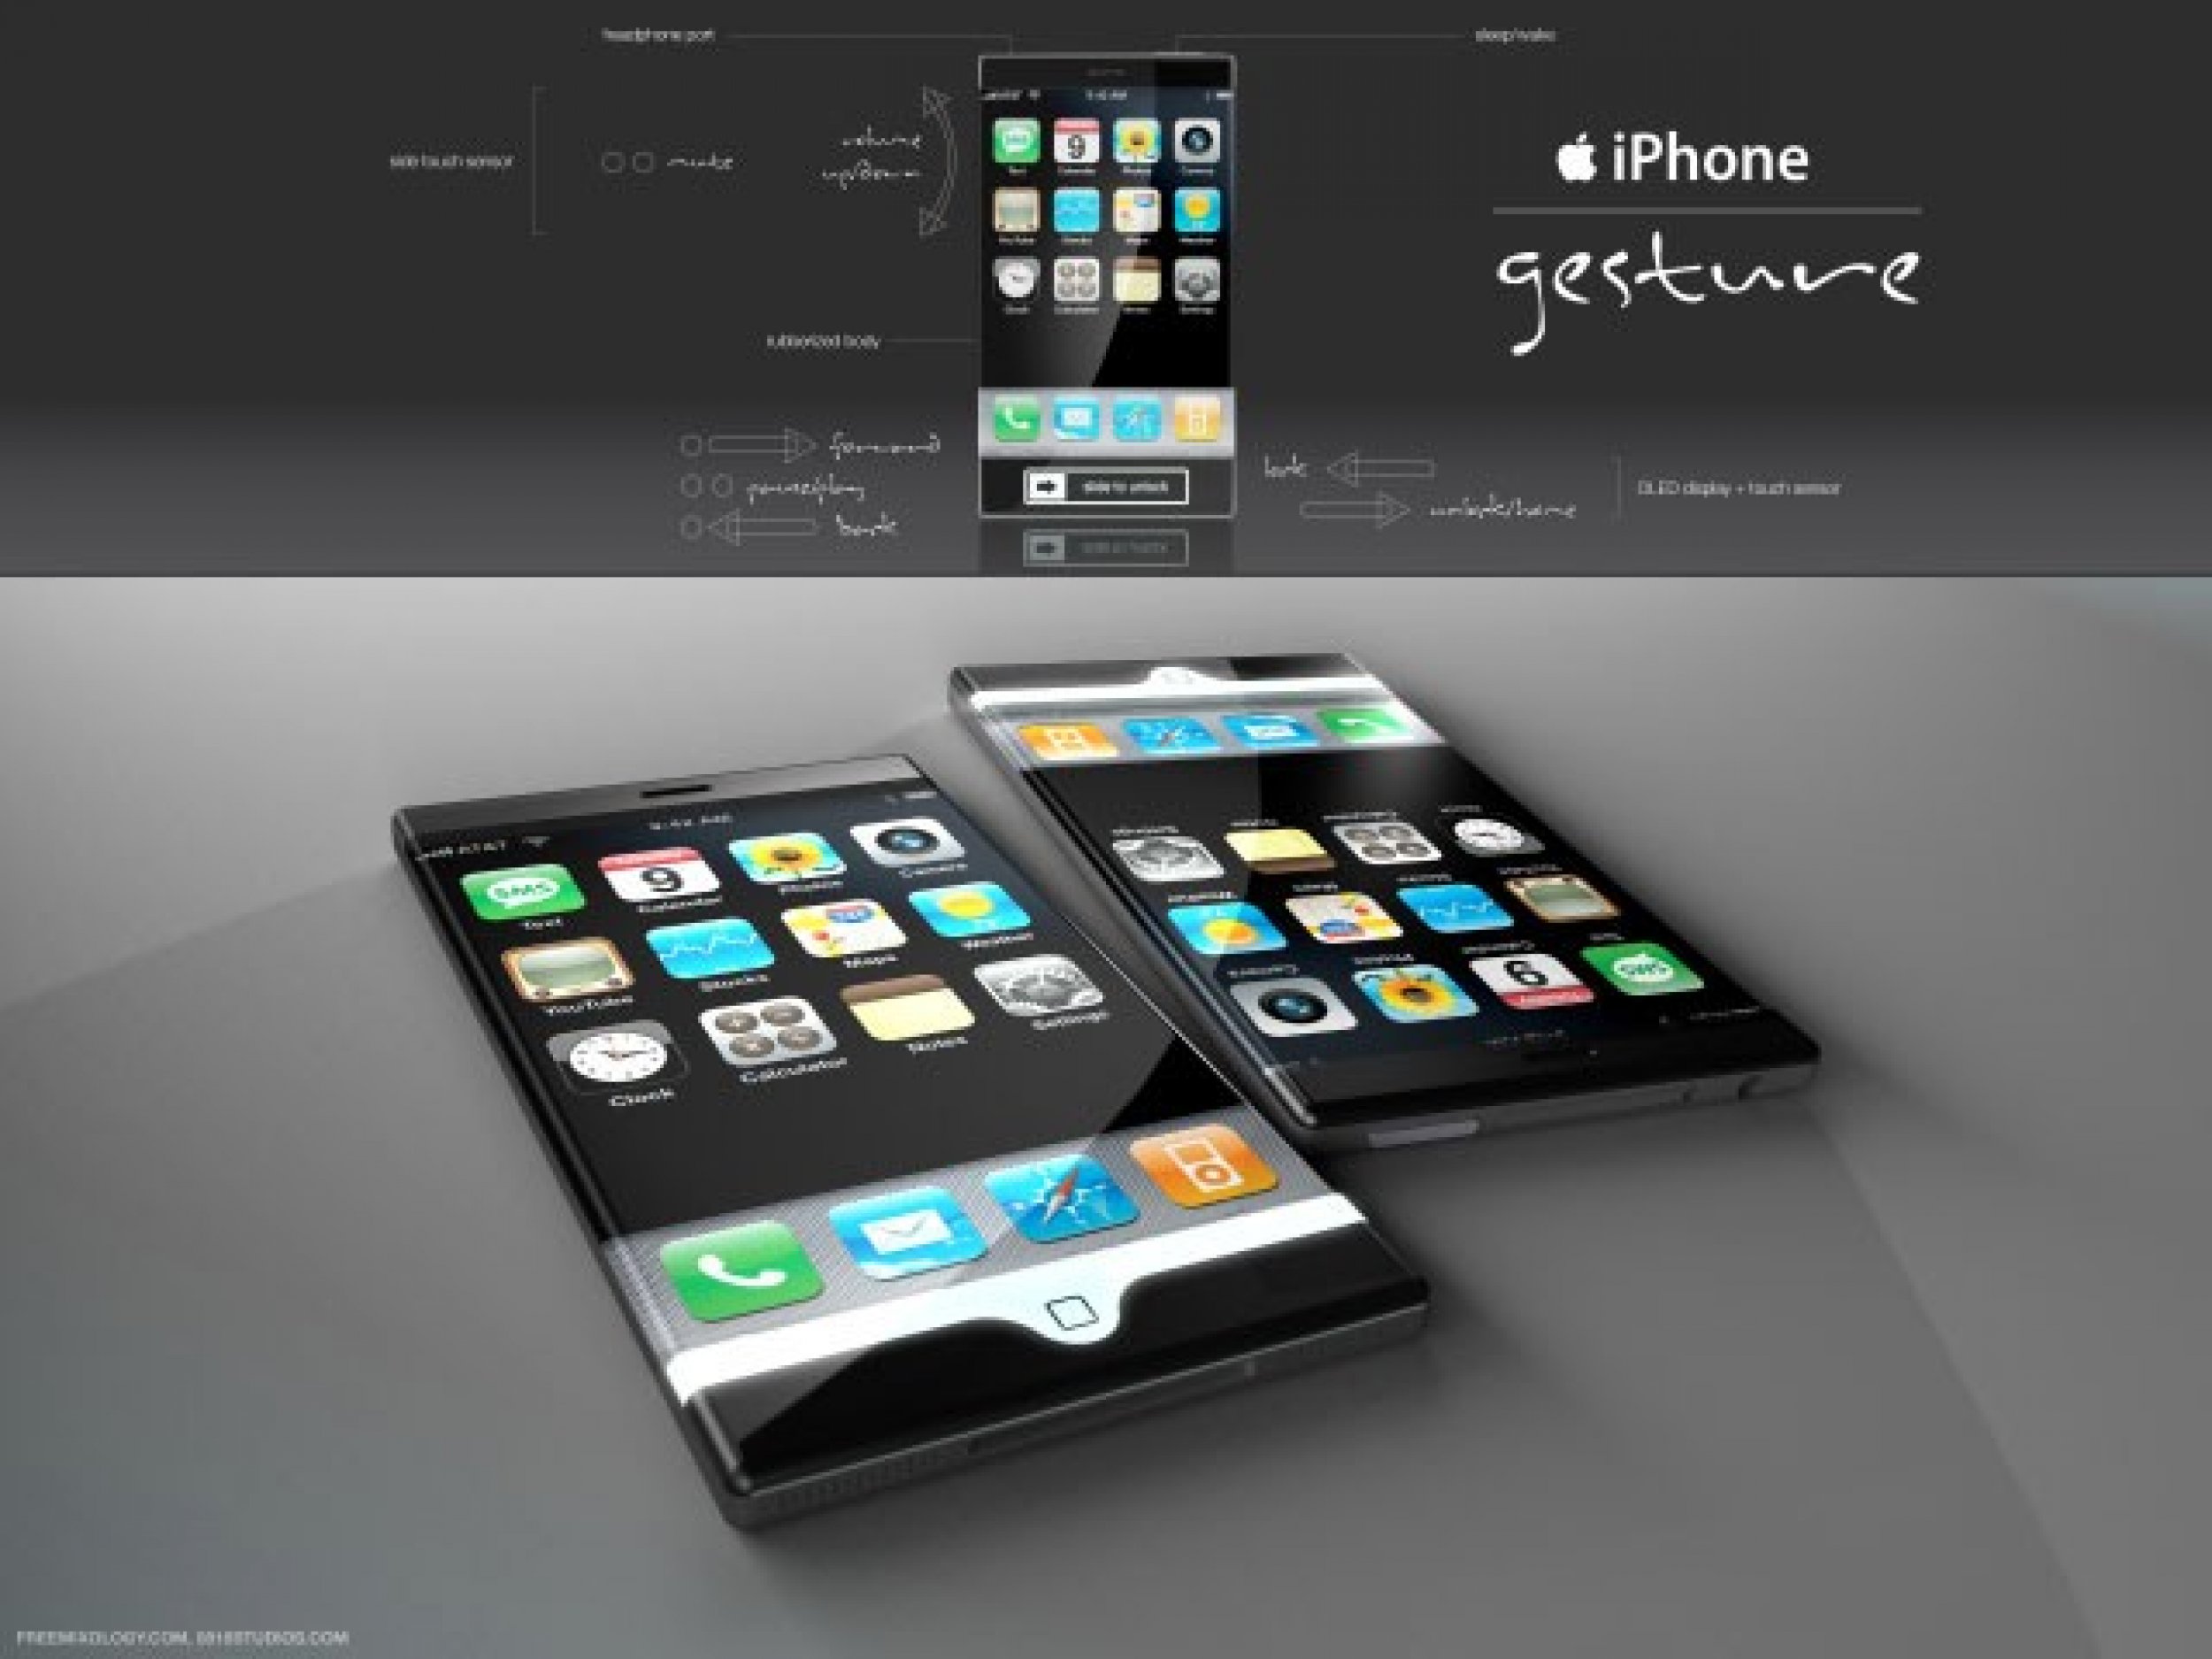 Gesture - control iPhone 5